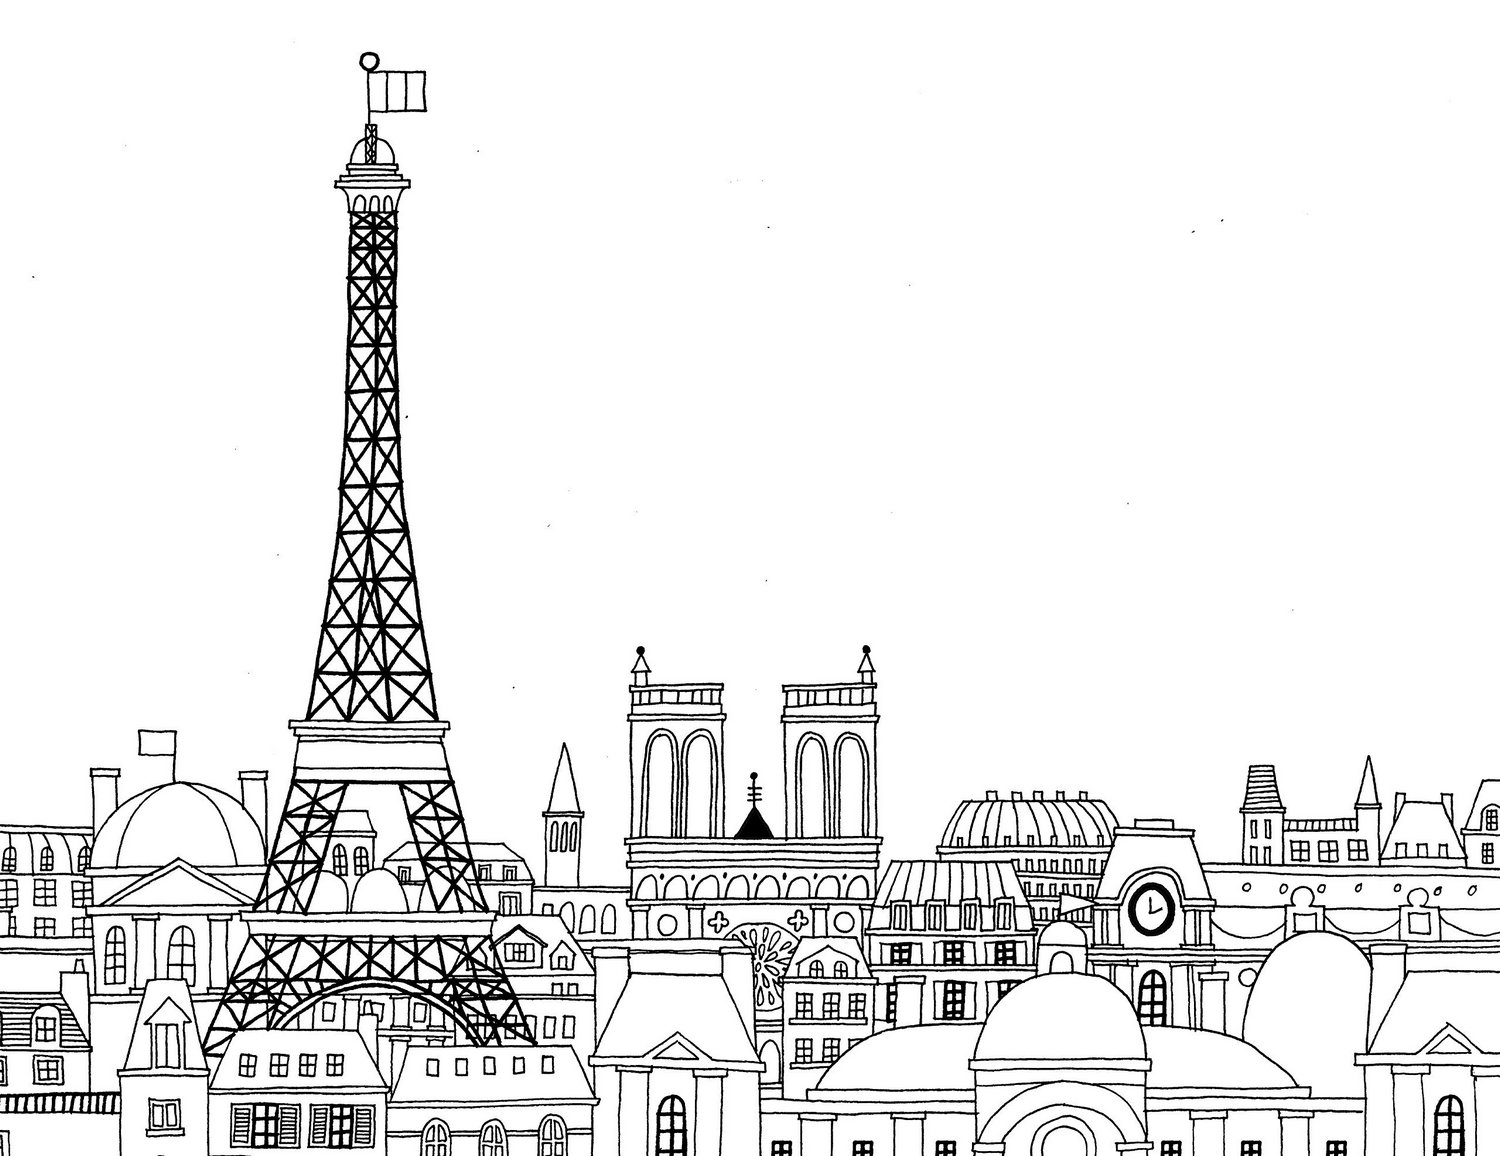 the-Eiffel-Tower-Paris-Coloring-Pages